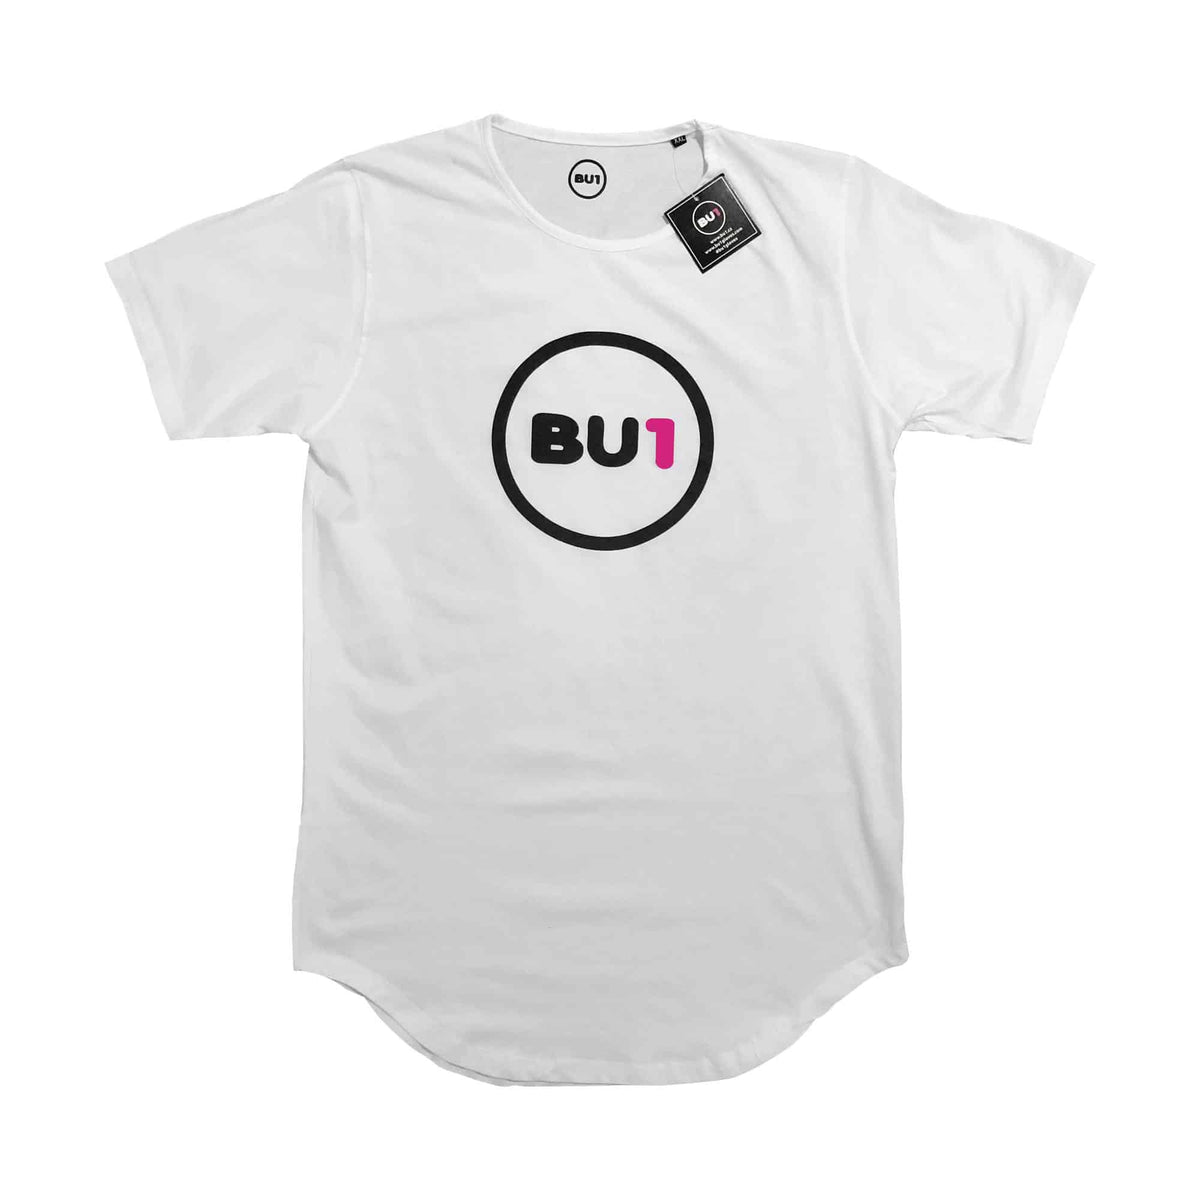 Camiseta BU1 blanca